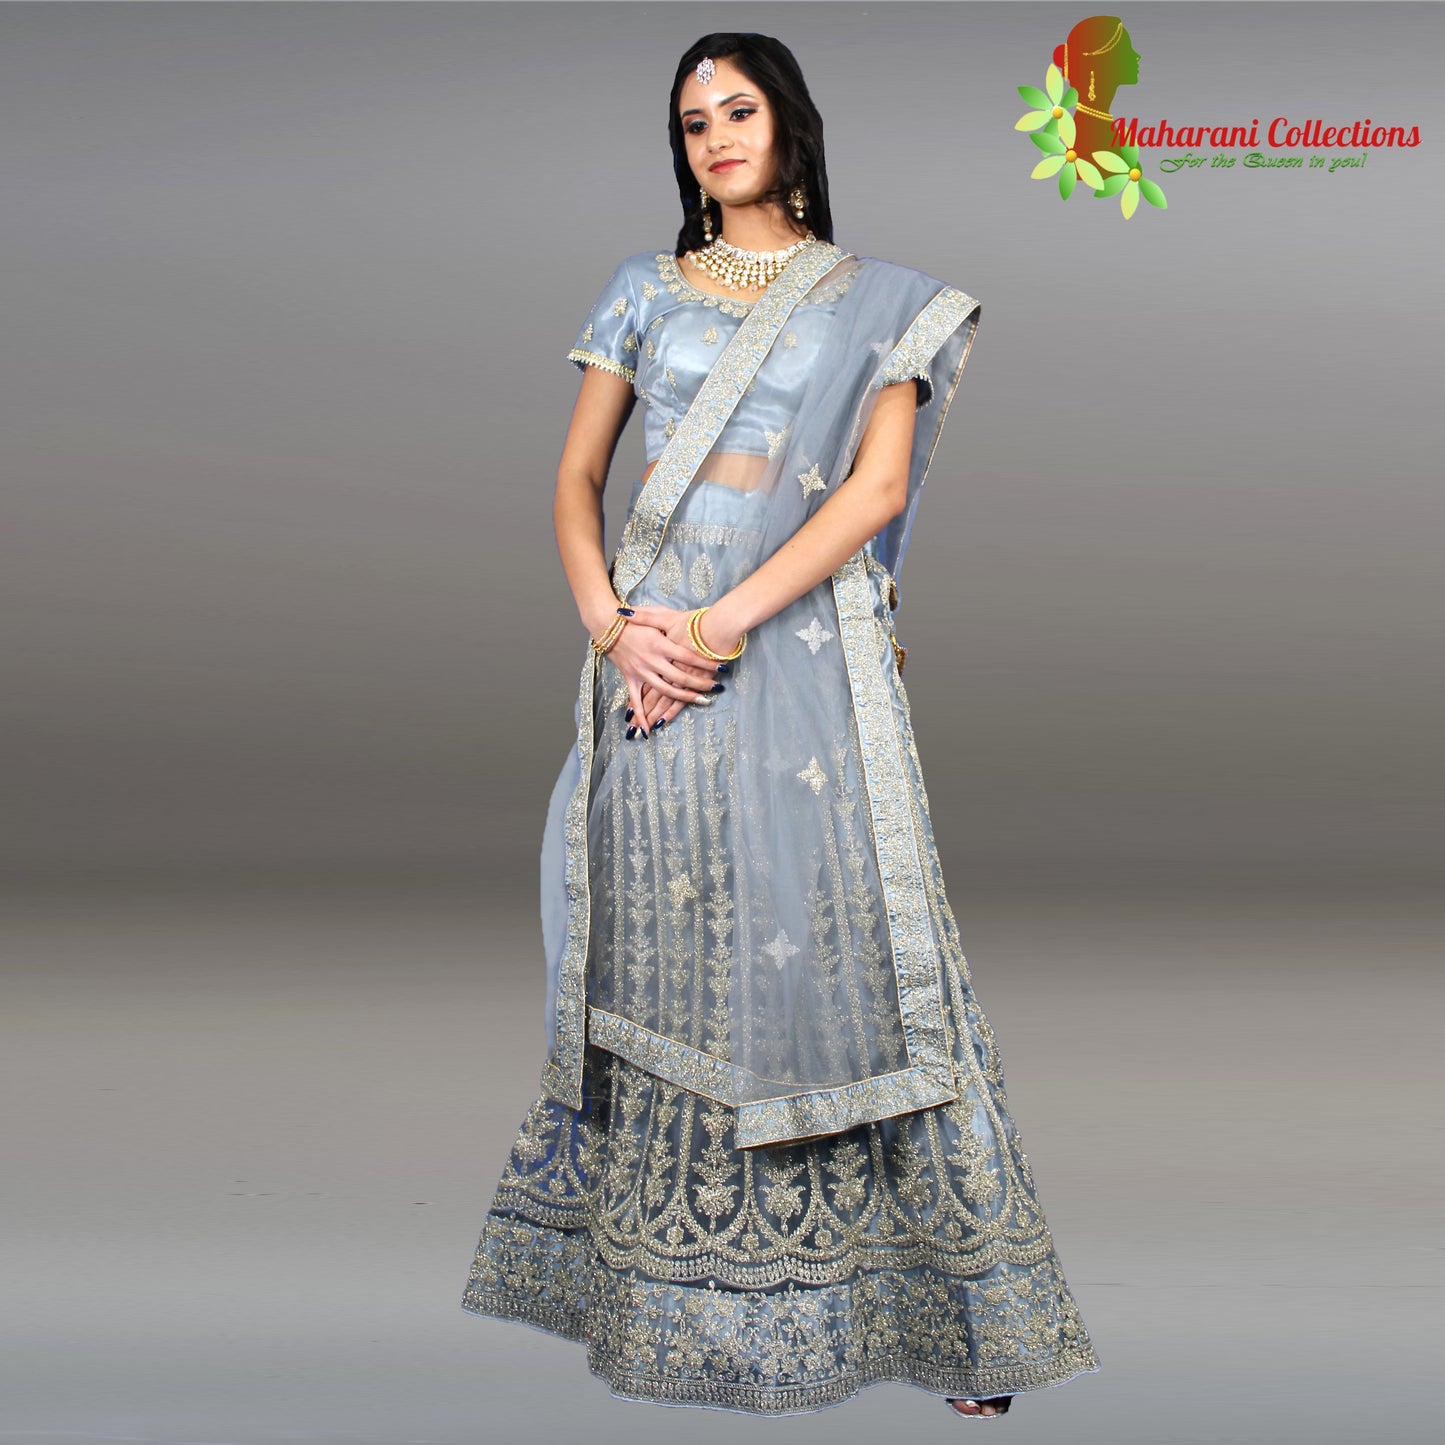 Maharani's Designer Net-Silk Lehenga - Light Blue with Zari and Sequins Embroidery